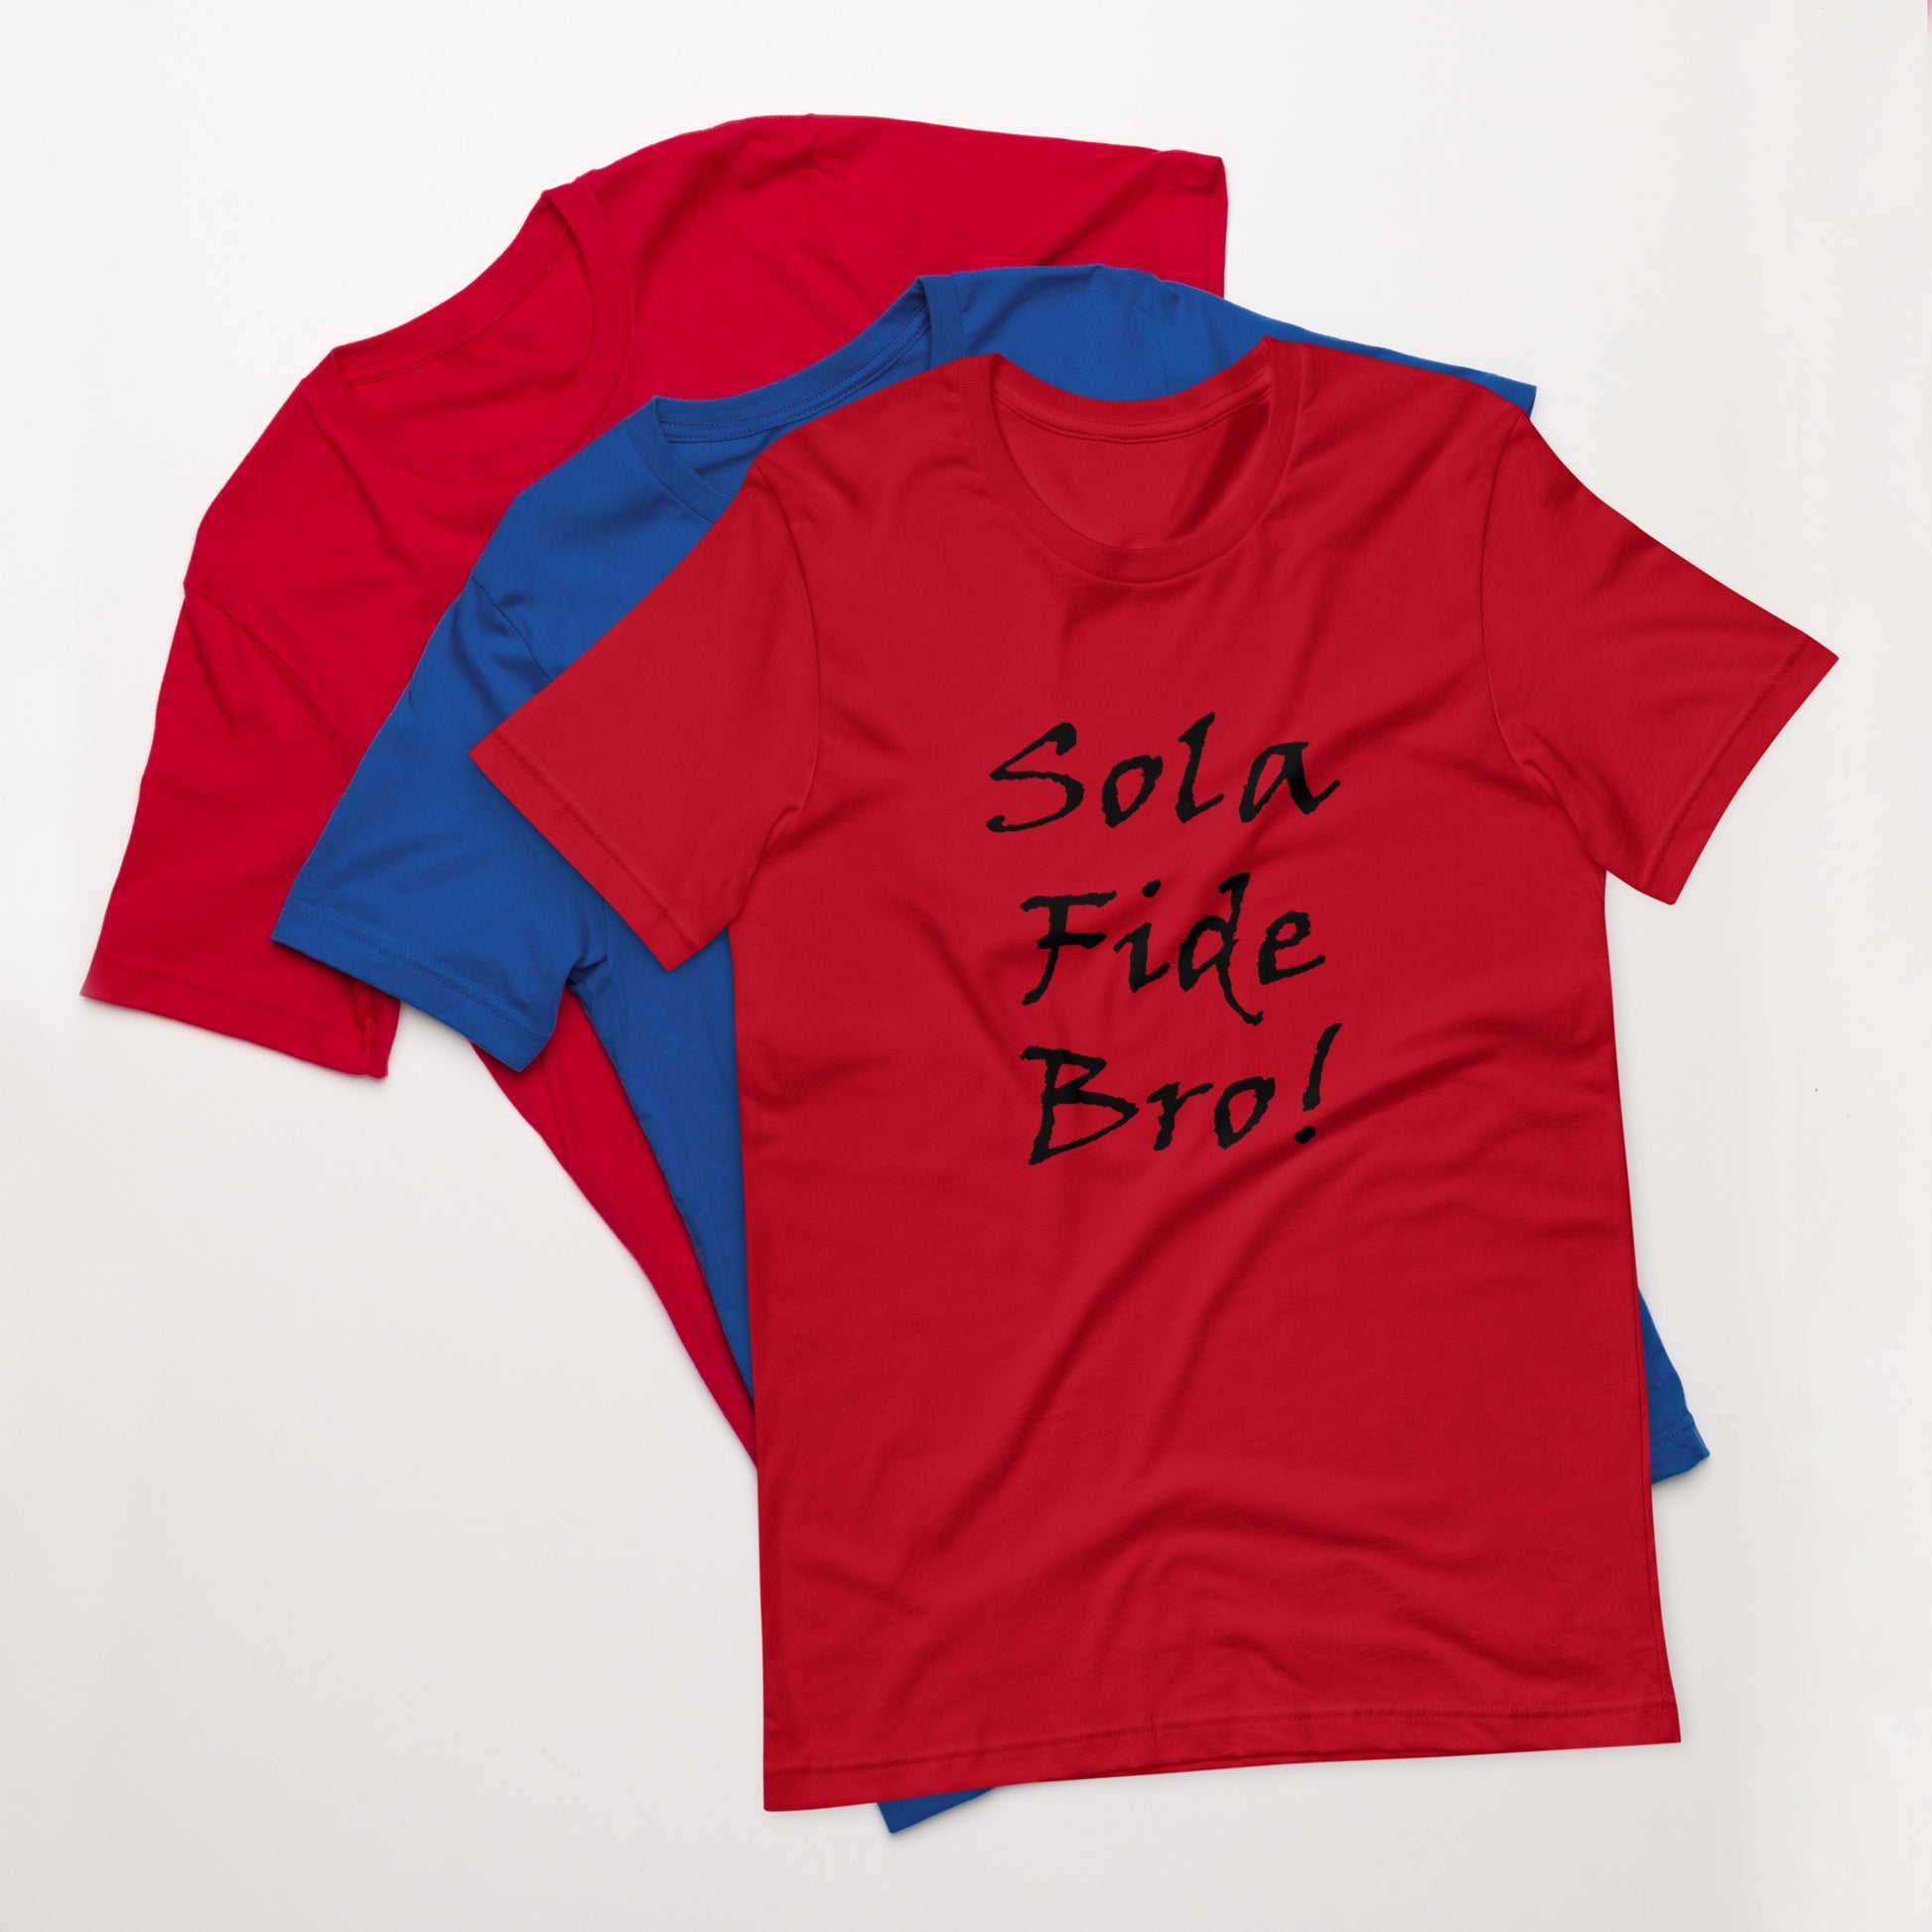 Sola Fida Bro! Unisex t-shirt - Solid Rock Designs | Christian Apparel